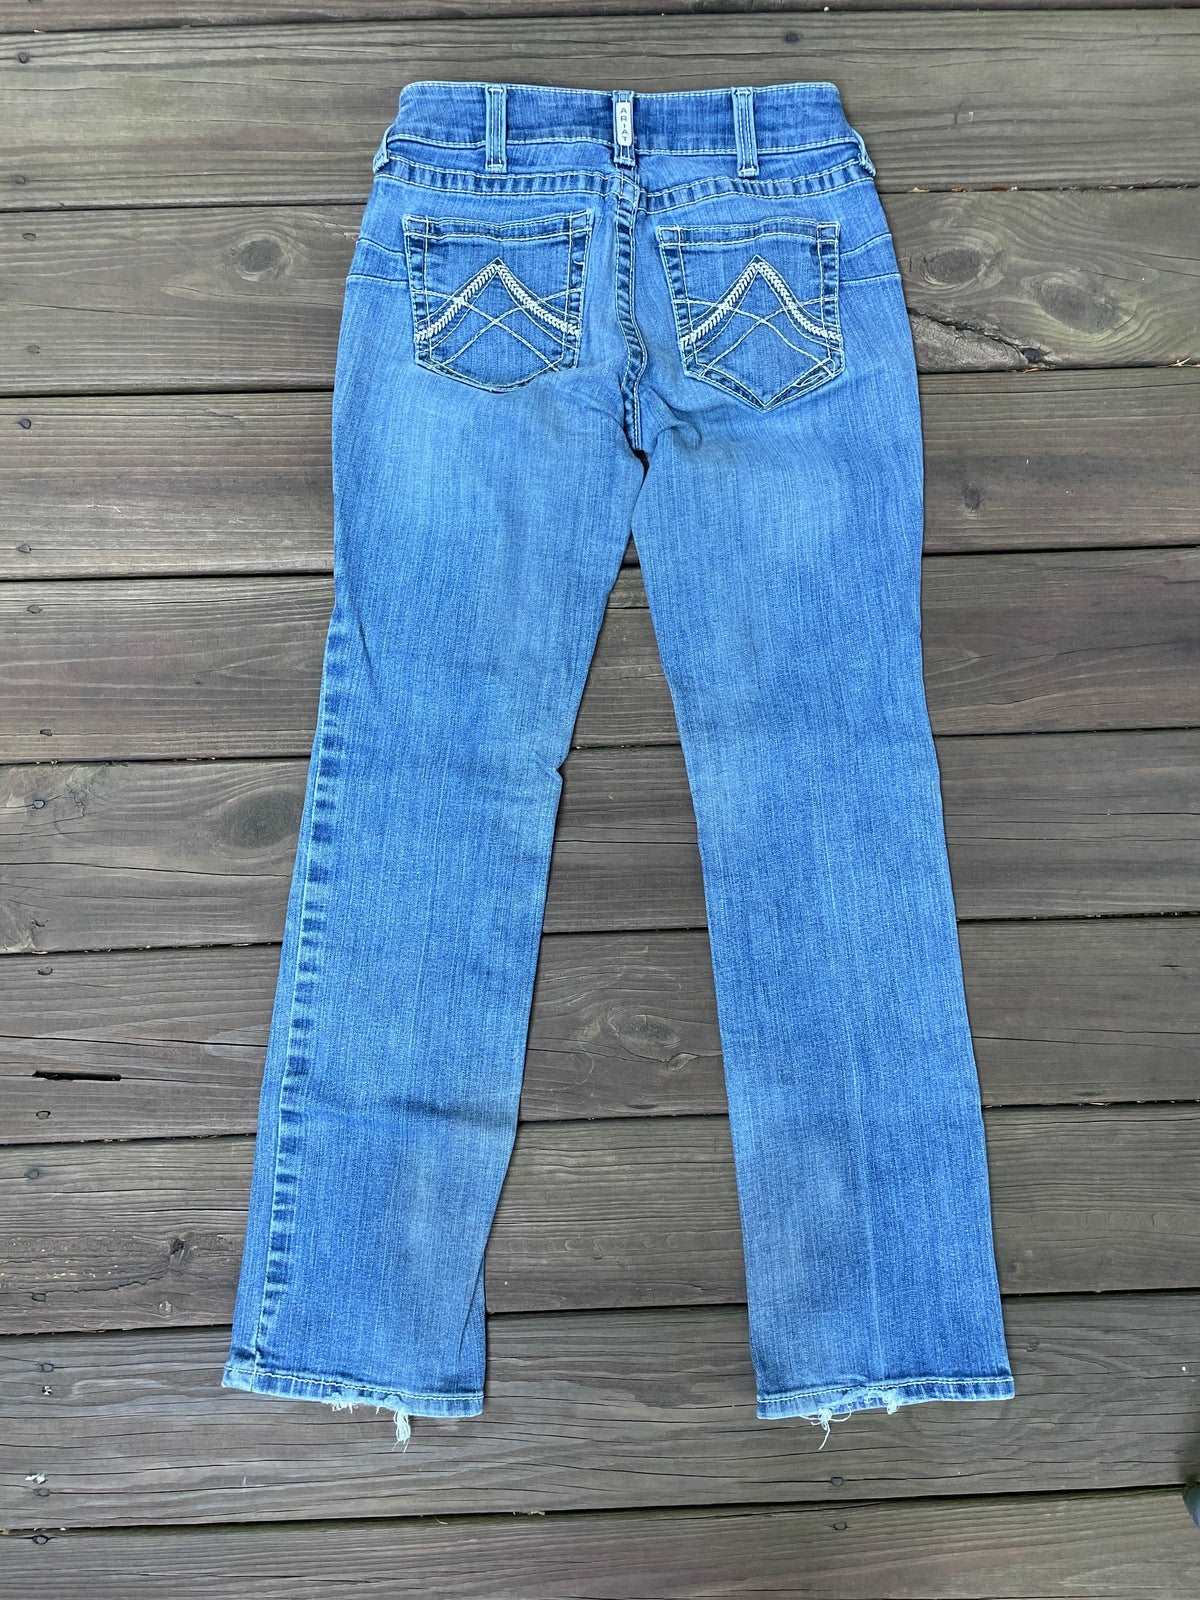 ThriftedEquestrian Clothing 29R Ariat Real Denim Jeans - 29R